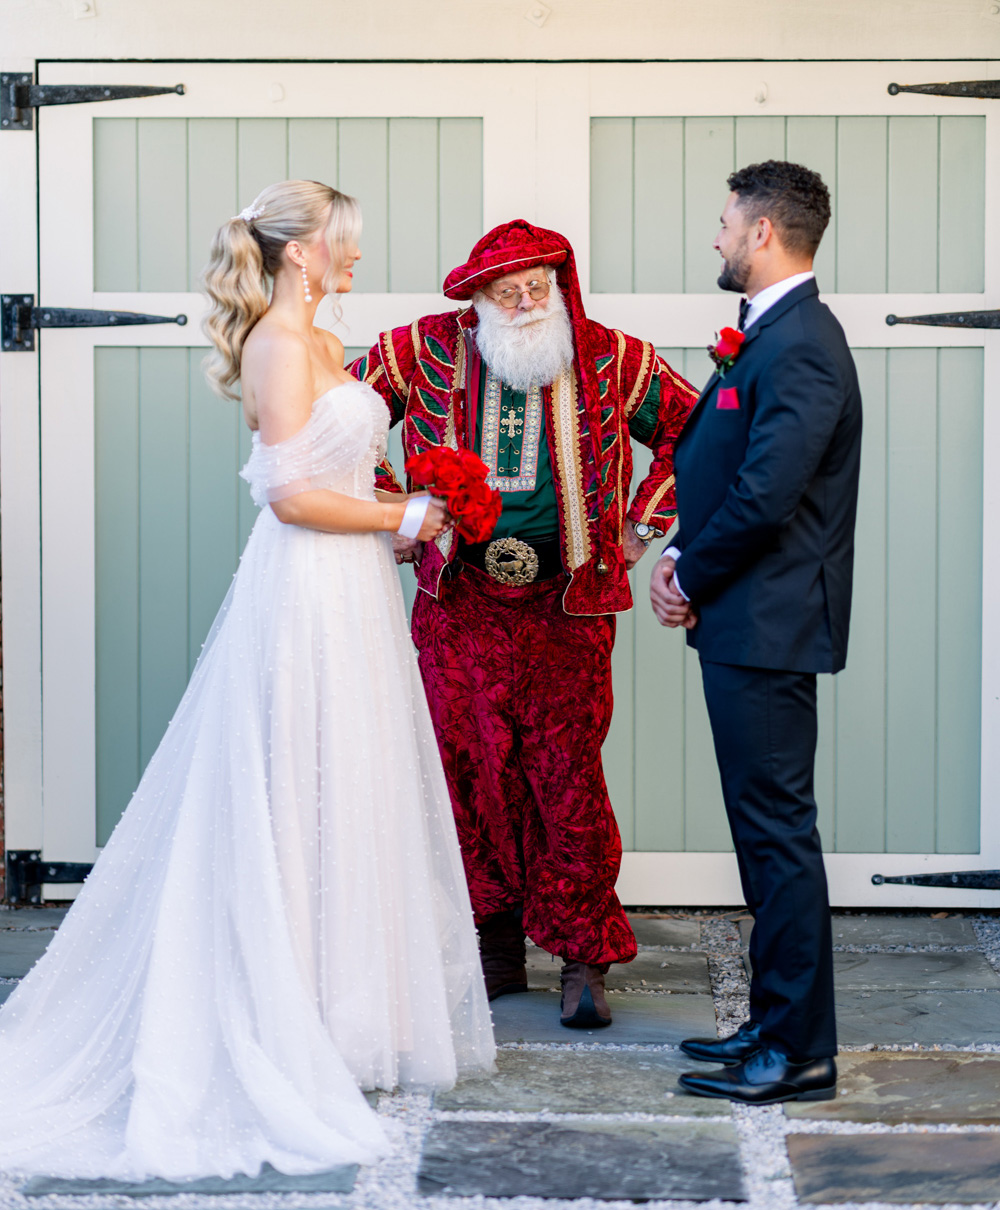 Santa Claus officiating a wedding ceremony